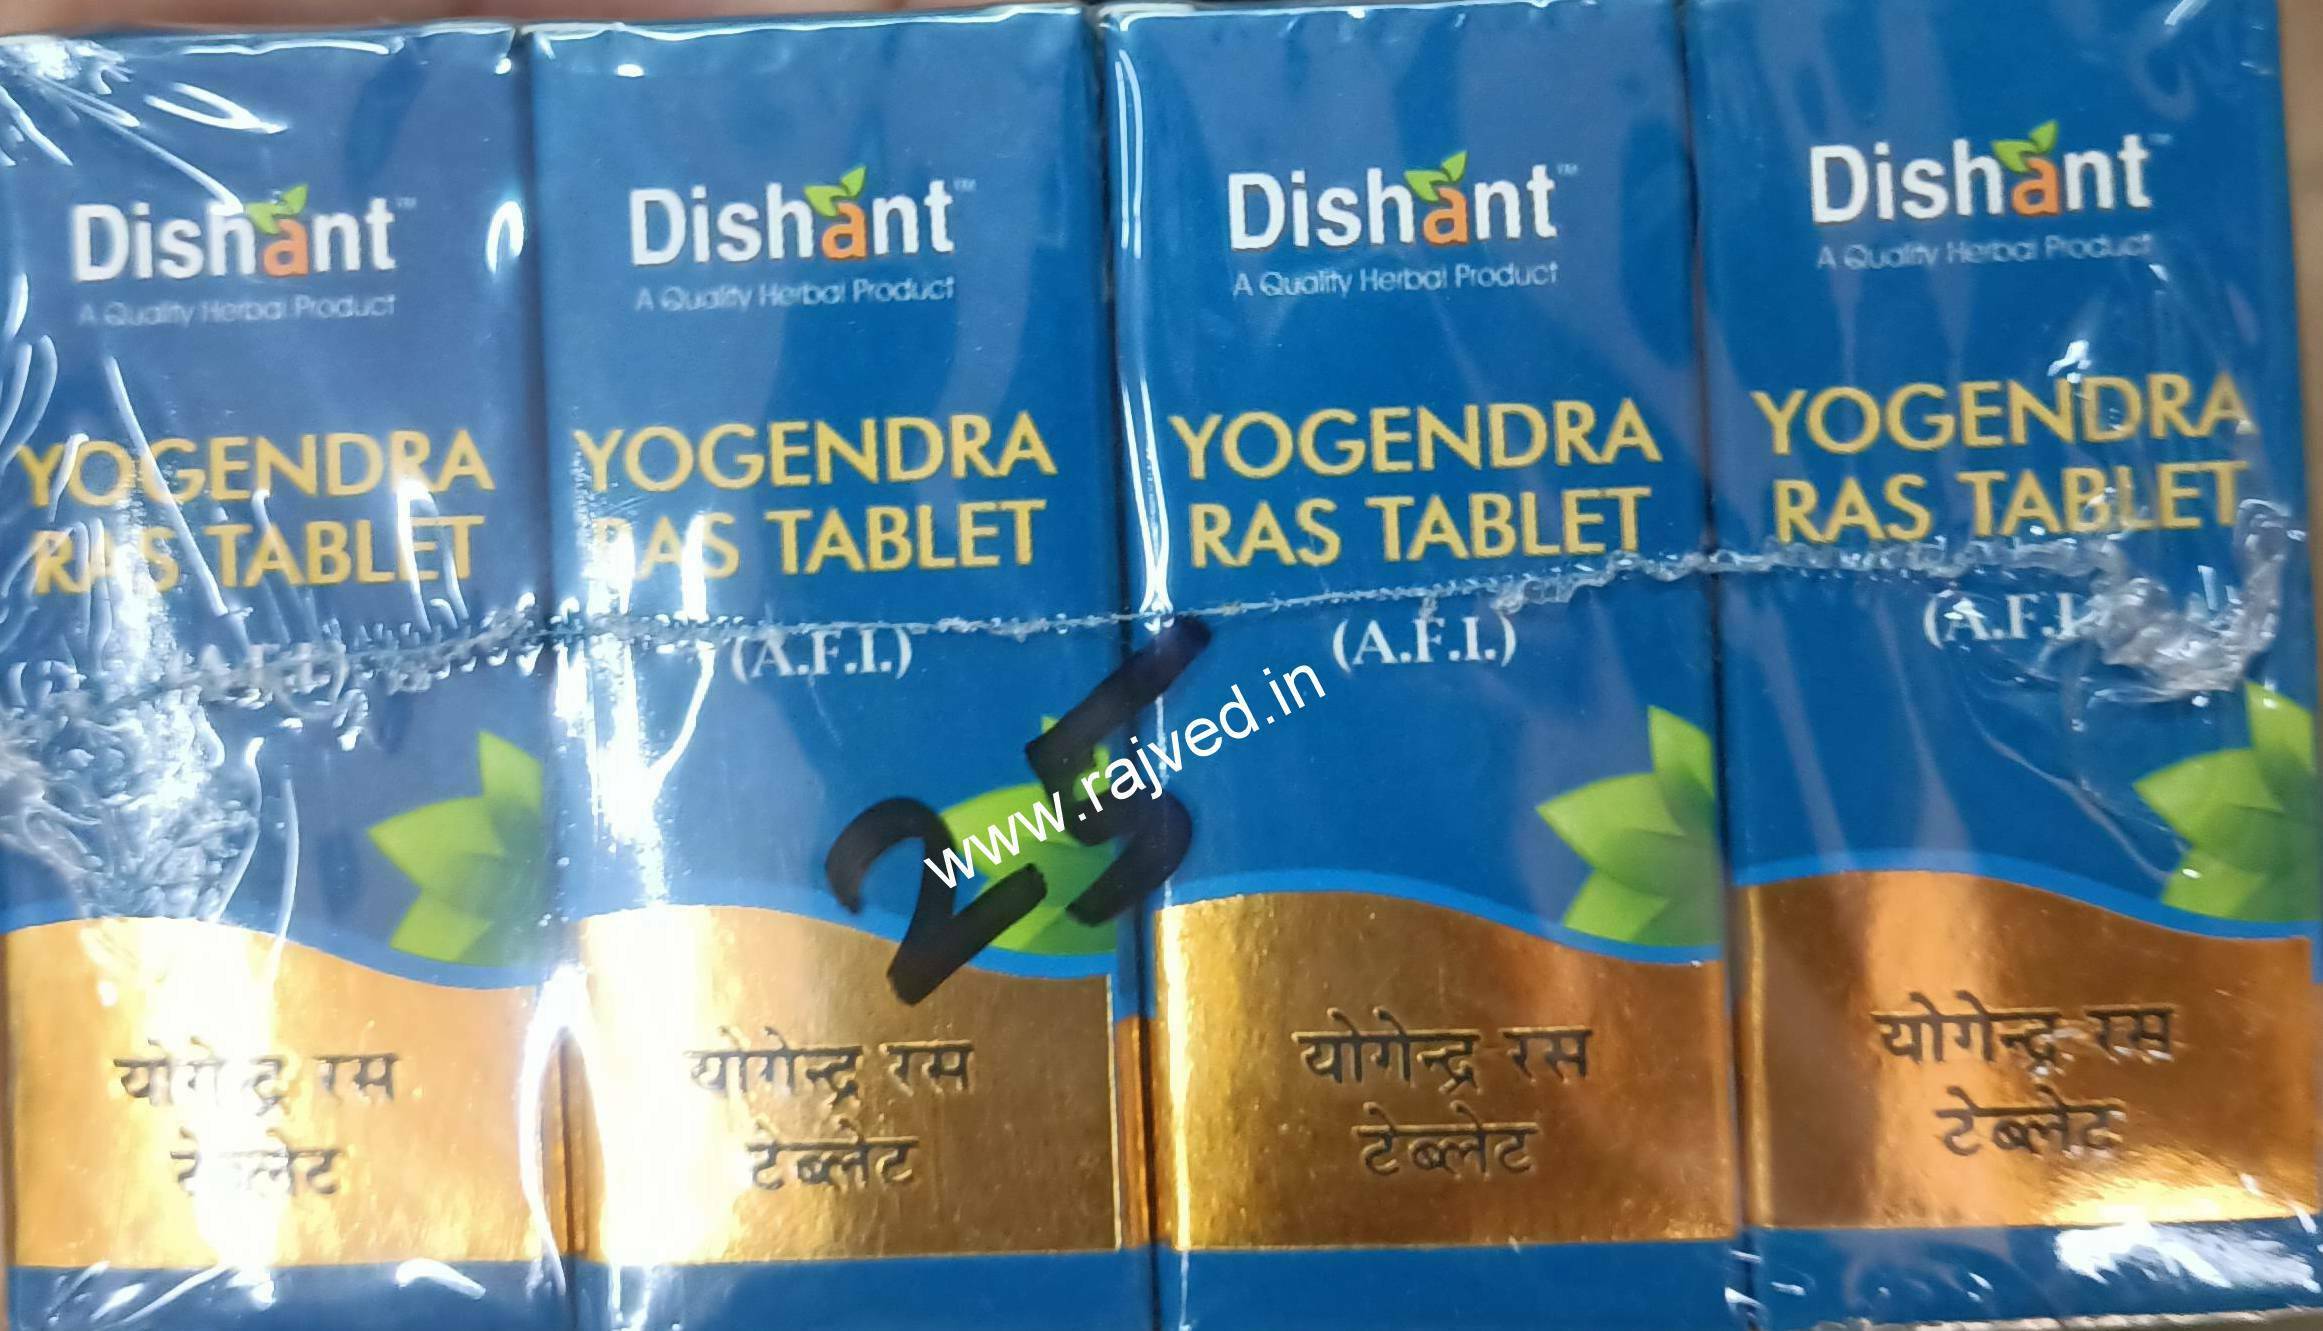 yogendra ras tablets 50 tab upto 30% off gold dishant ayurvedic suppliers